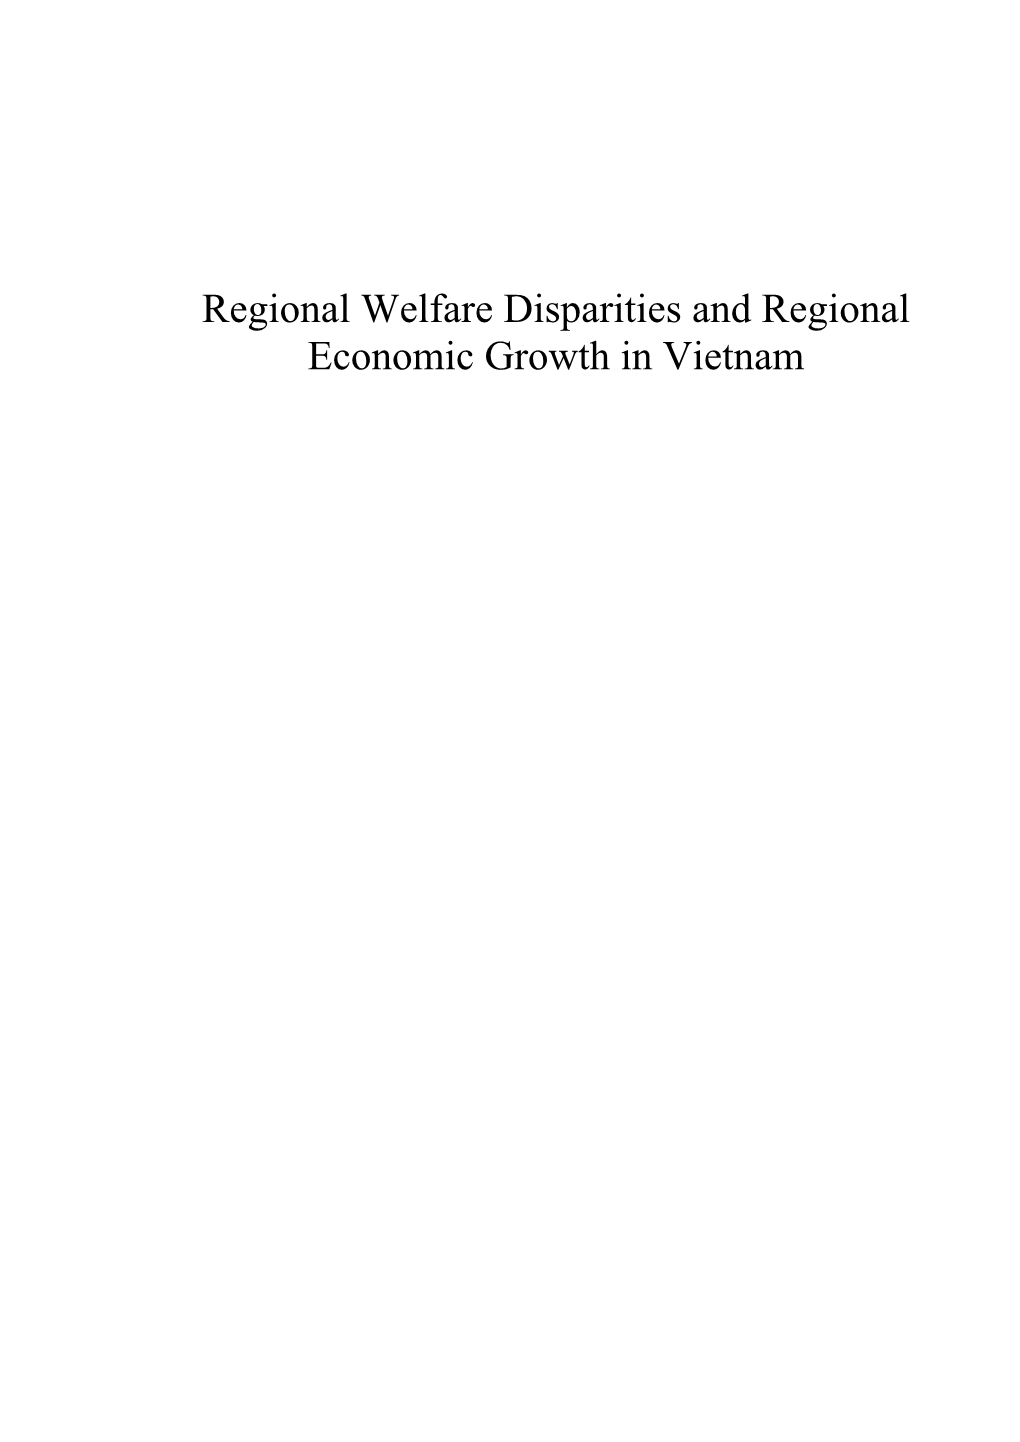 Regional Welfare Disparities and Regional Economic Growth in Vietnam